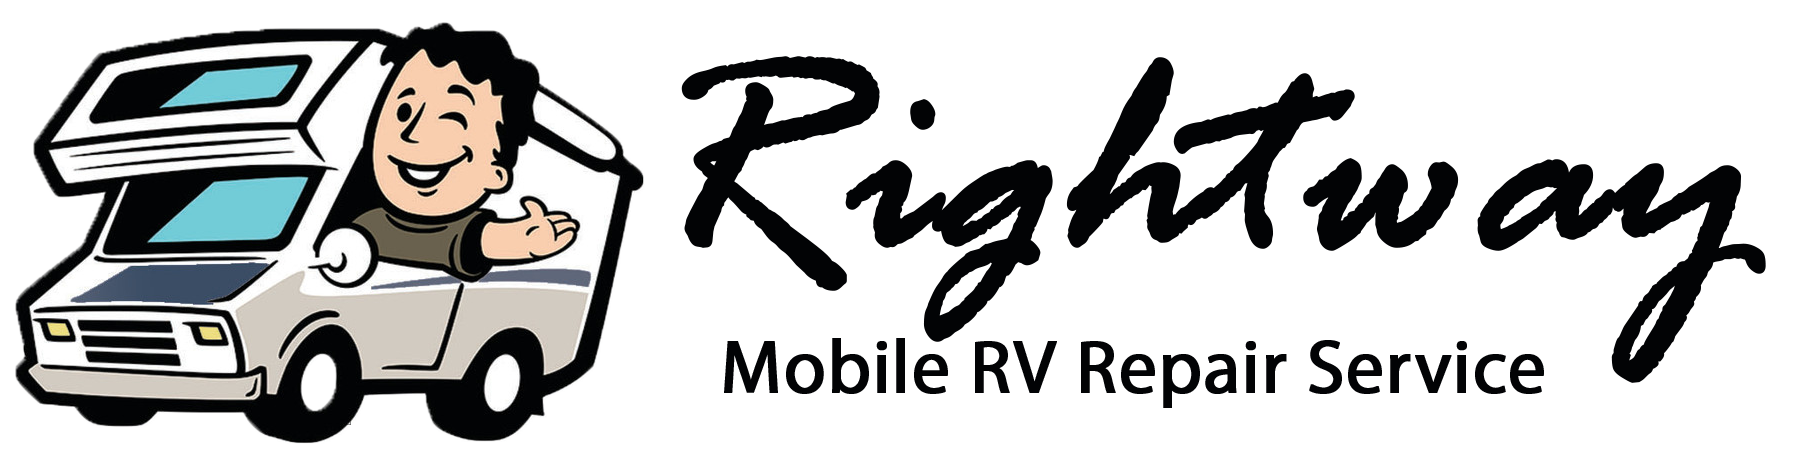 RIGHTWAY MOBILE RV REPAIR SERVICE